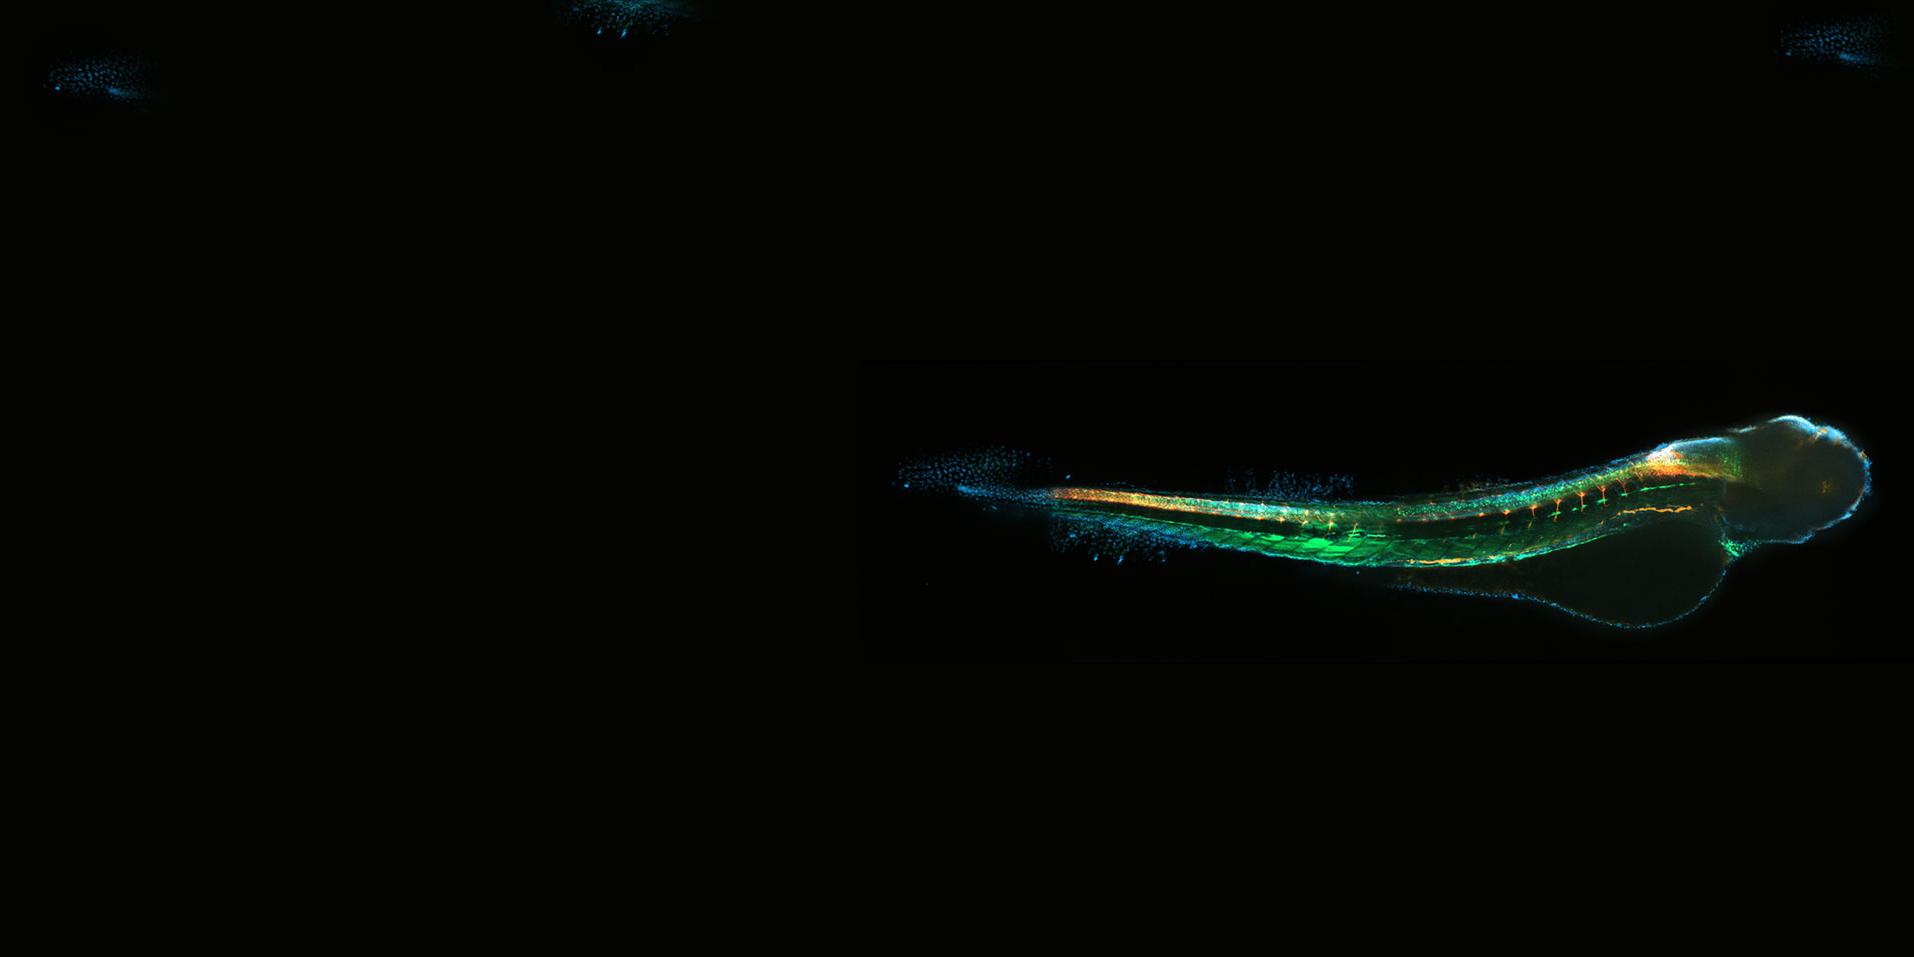 larva transgénica de pez cebra. Cortesía de H. Reuter, Leibniz-Institute on Aging – Fritz-Lipmann-Institut e.V. (FLI), Alemania.